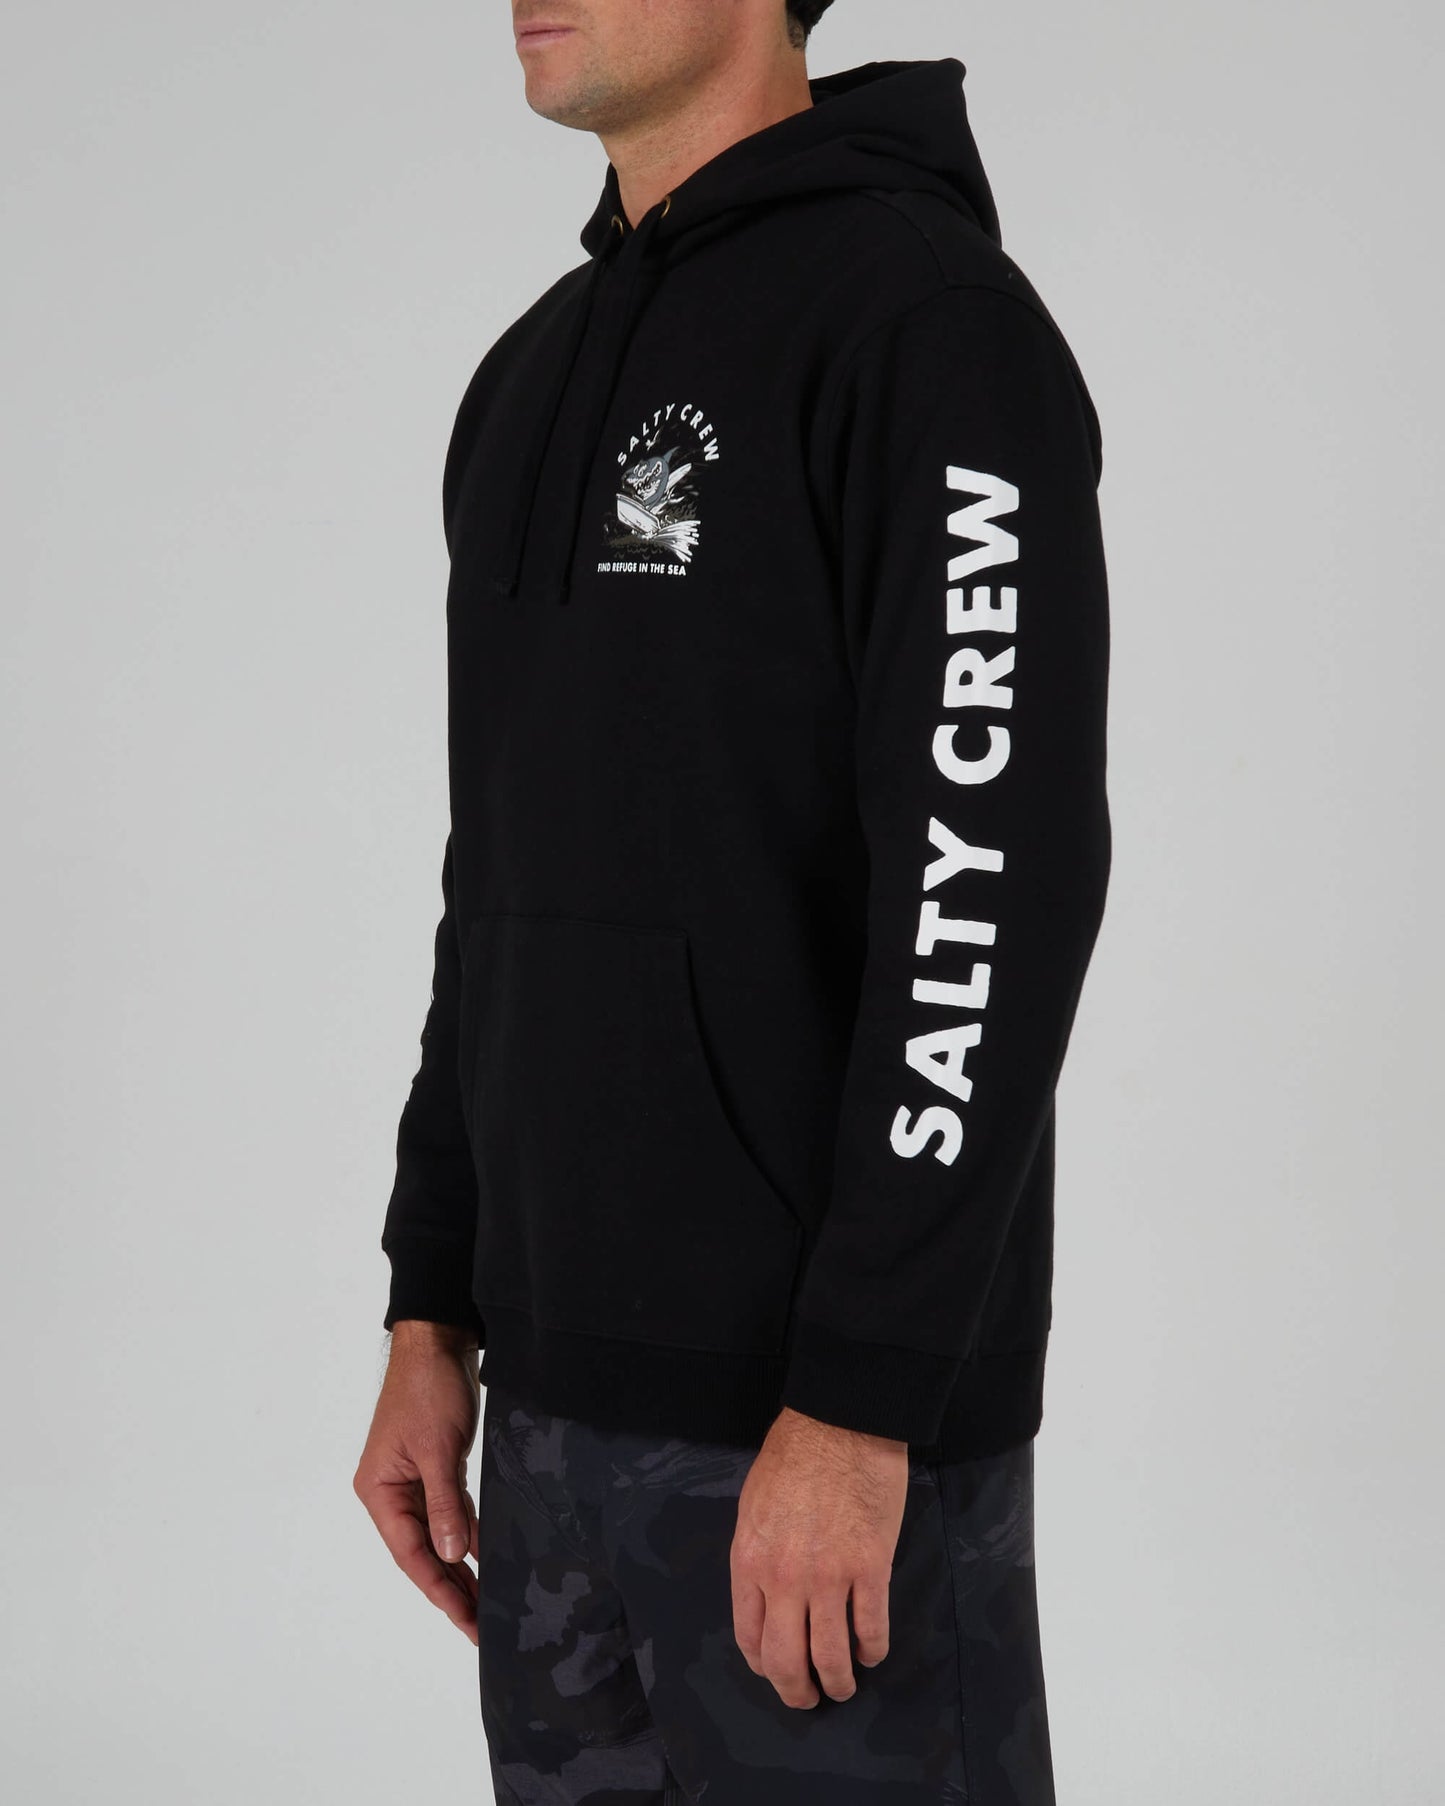 Salty crew FLEECE CUSTOM Hot Rod Shark Hood Fleece - Black in Black